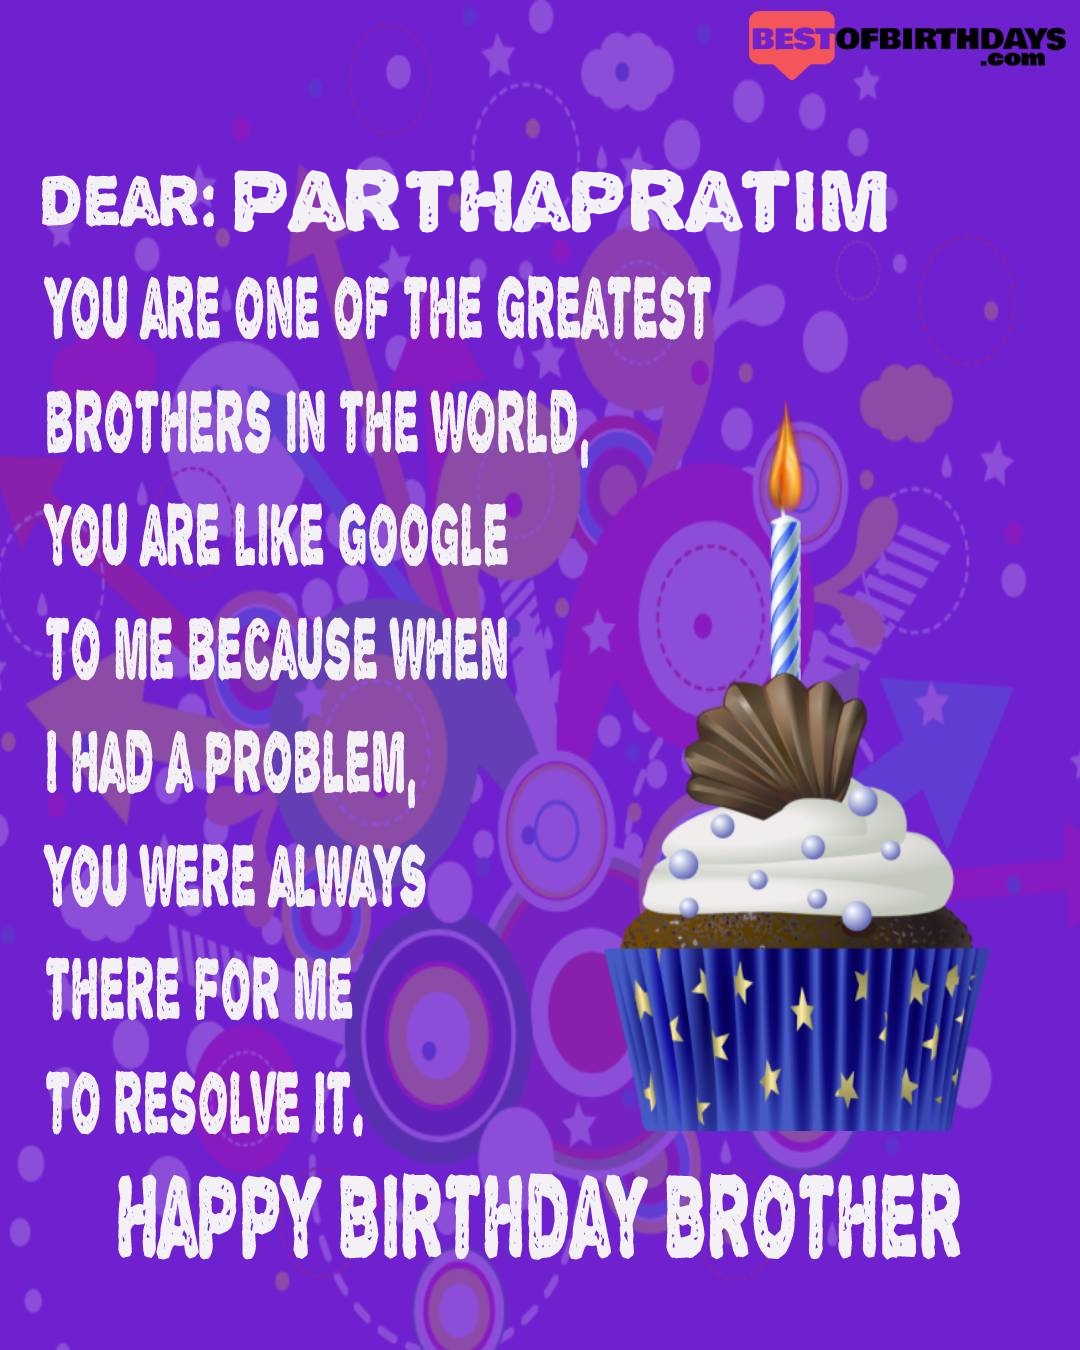 Happy birthday parthapratim bhai brother bro